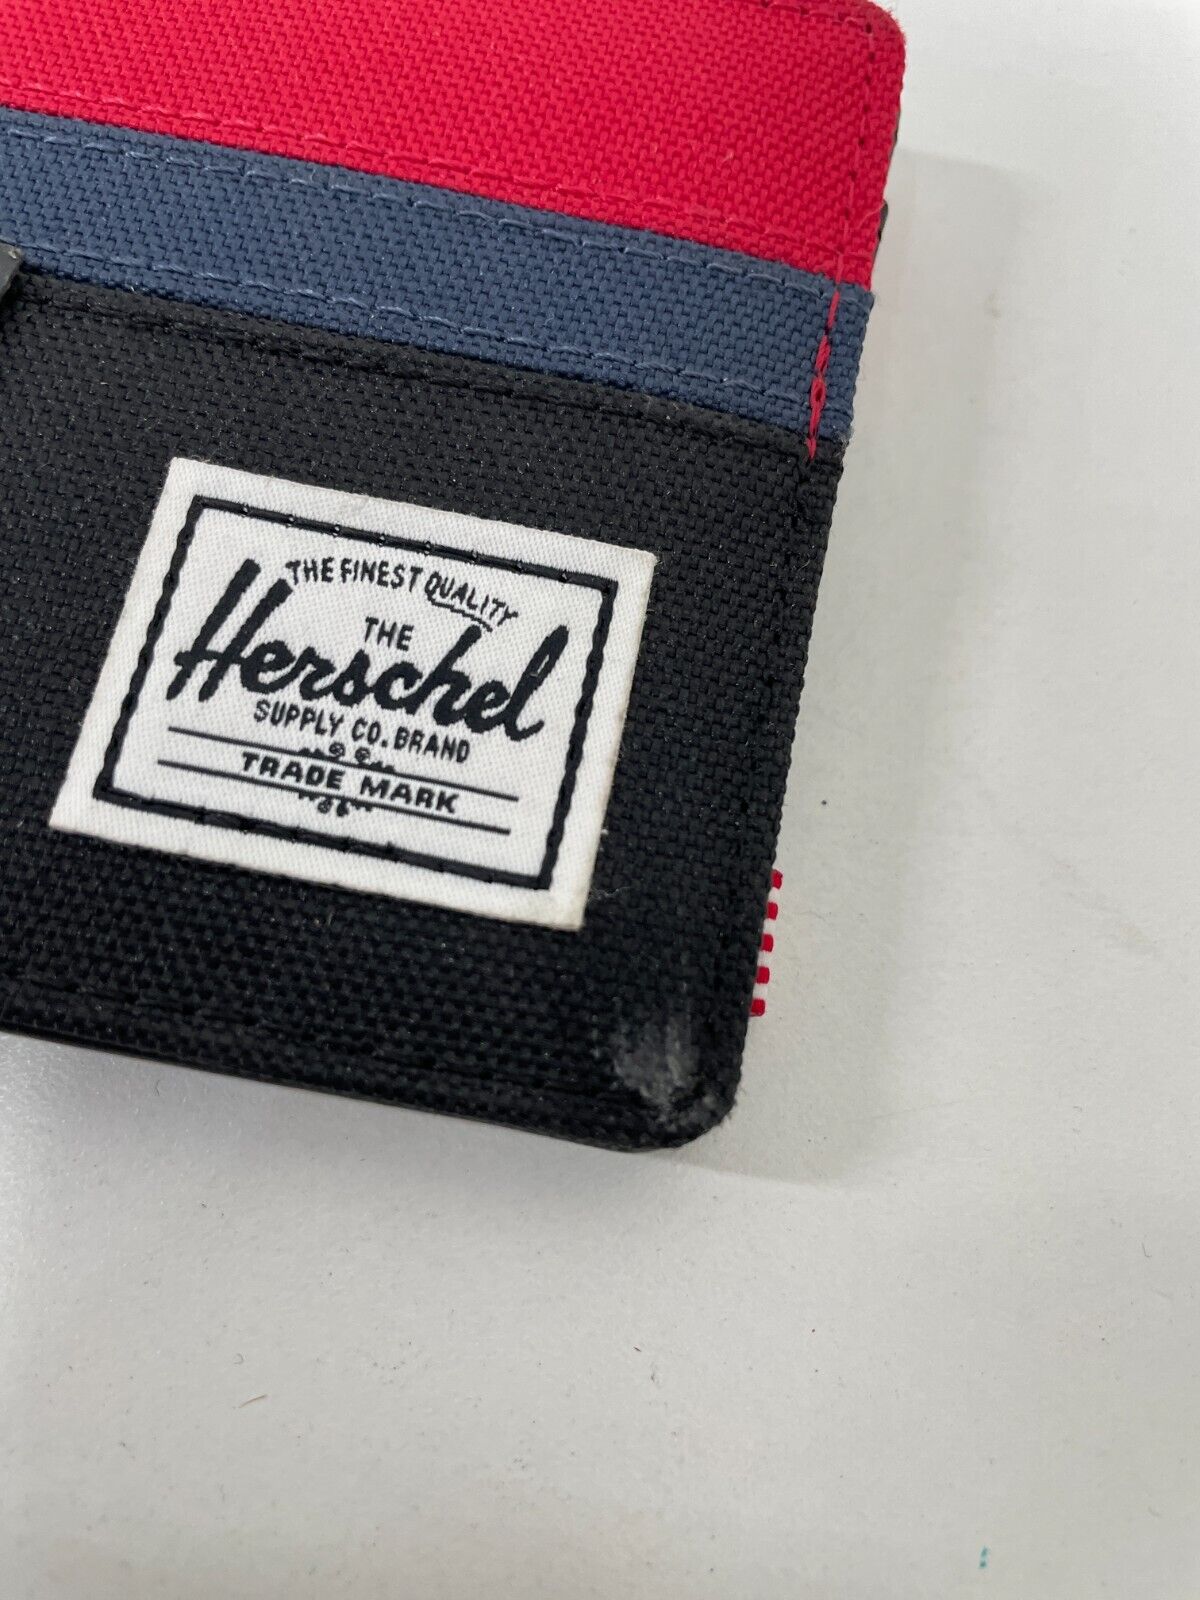 Herschel OS Hank Wallet Black/Navy/Red Bi-Fold RFID EcoSystem Fabric Vegan NWT